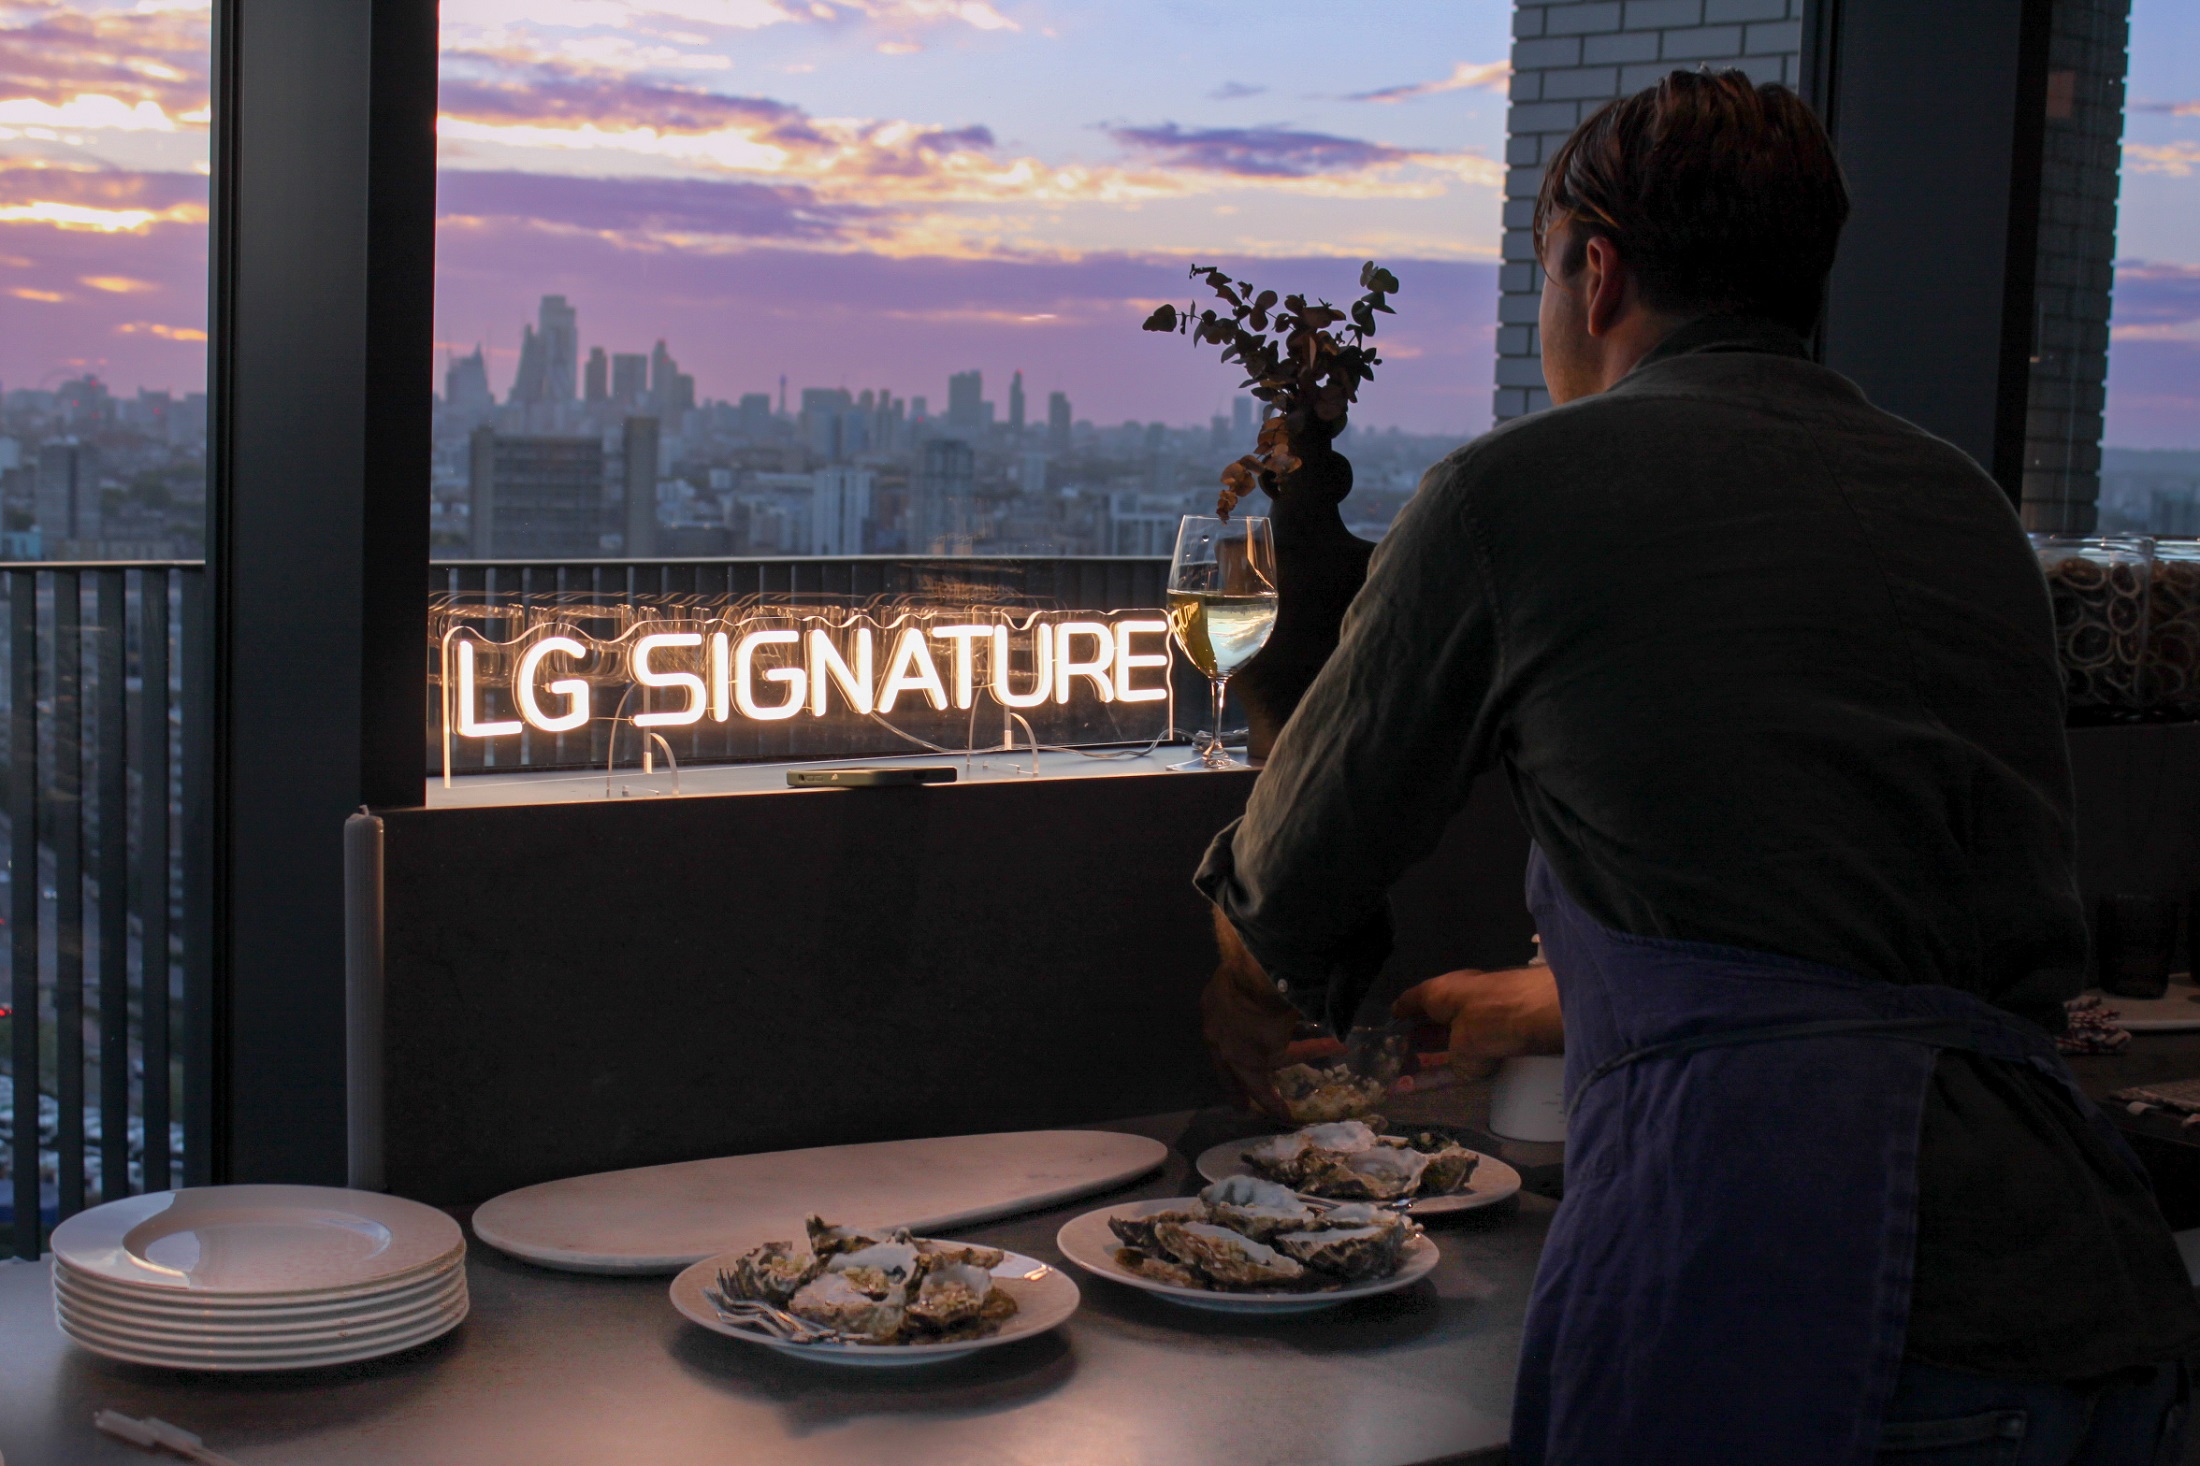 [LG SIGNATURE Inspirations] فن آوری در لندن با طعم های عالی و هارمونی های استادانه ملاقات می کند